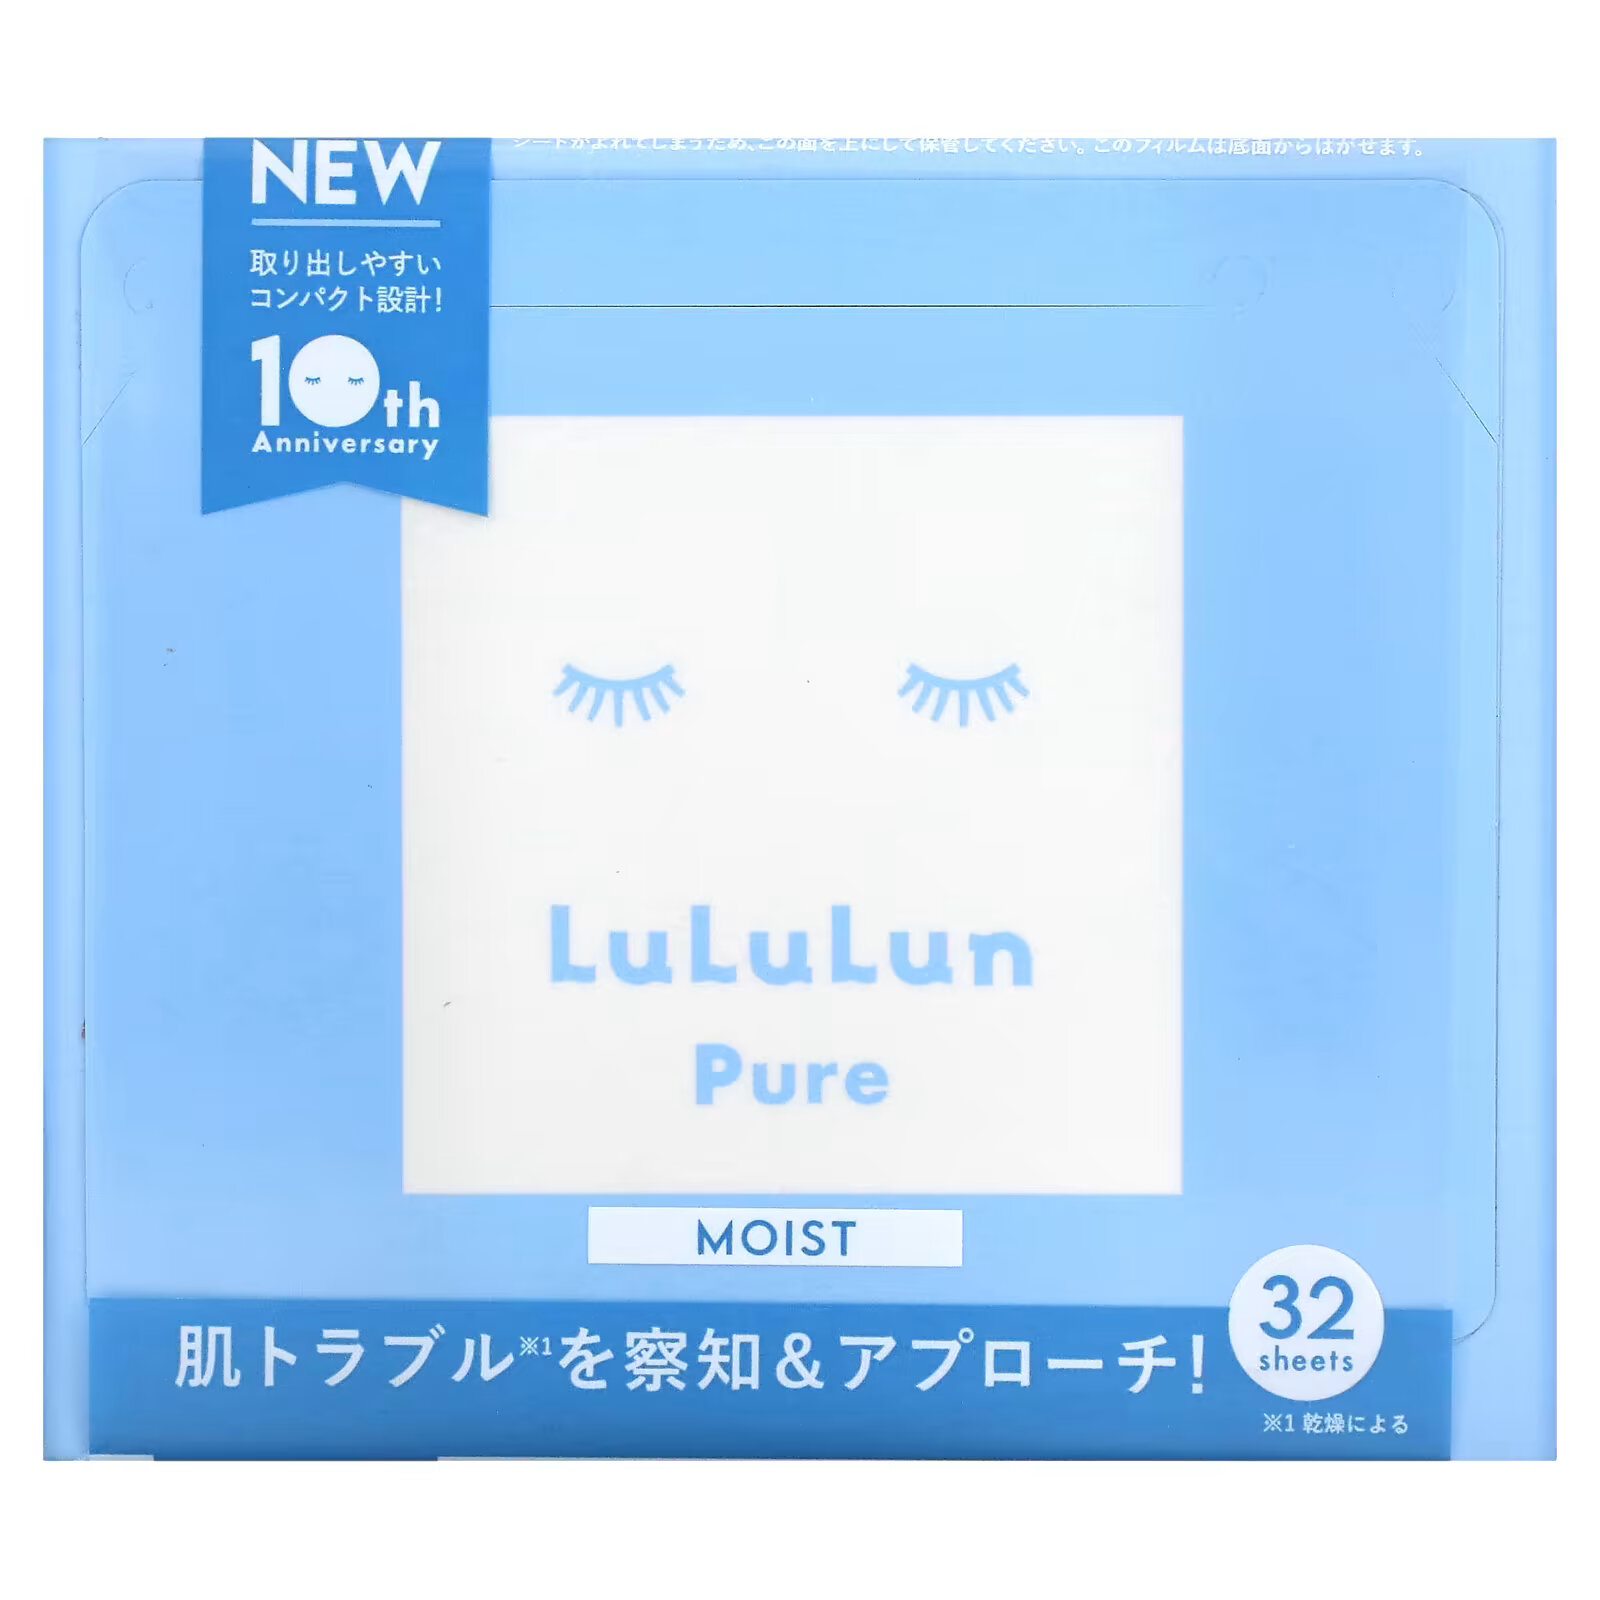 Lululun, Beauty Sheet Mask, увлажняющая, чистый синий 6FB`` 32 шт.